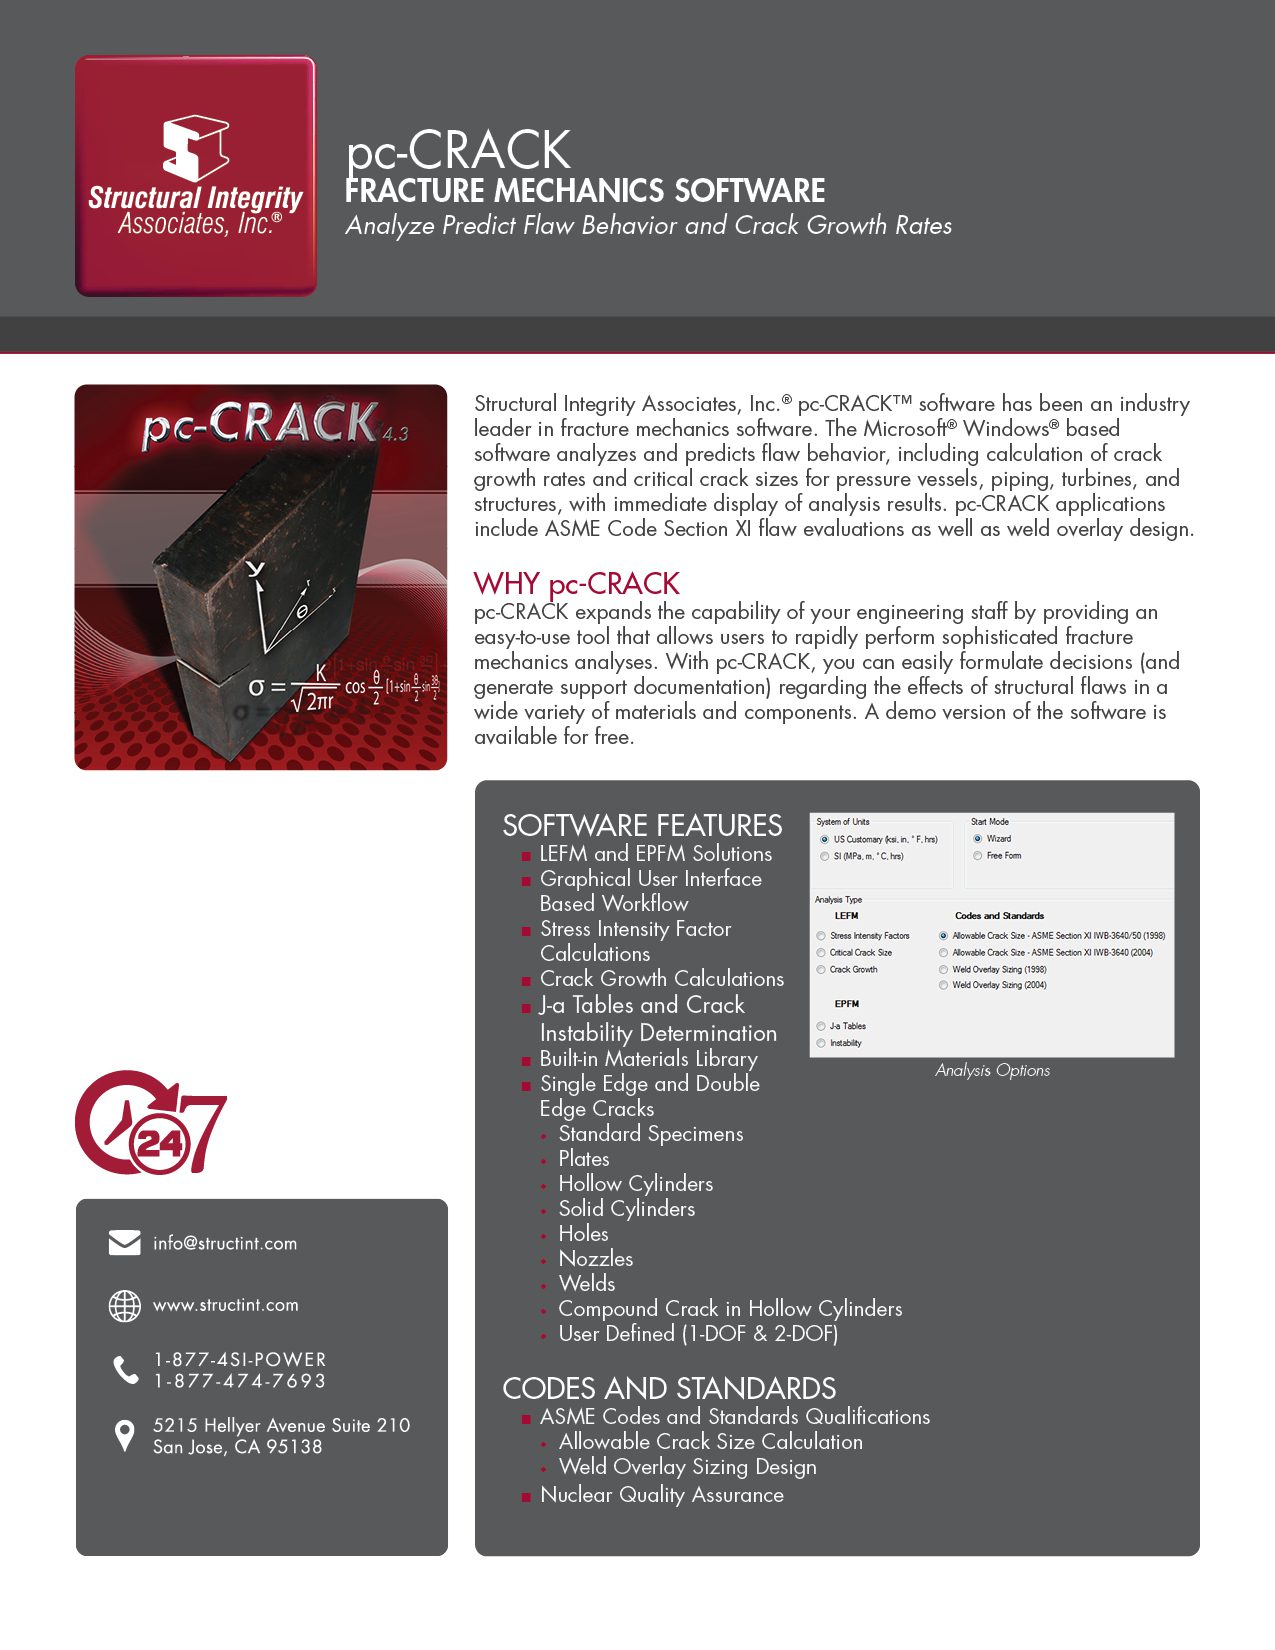 Structural Integrity Associates | pc-CRACK | Fracture Mechanics Software